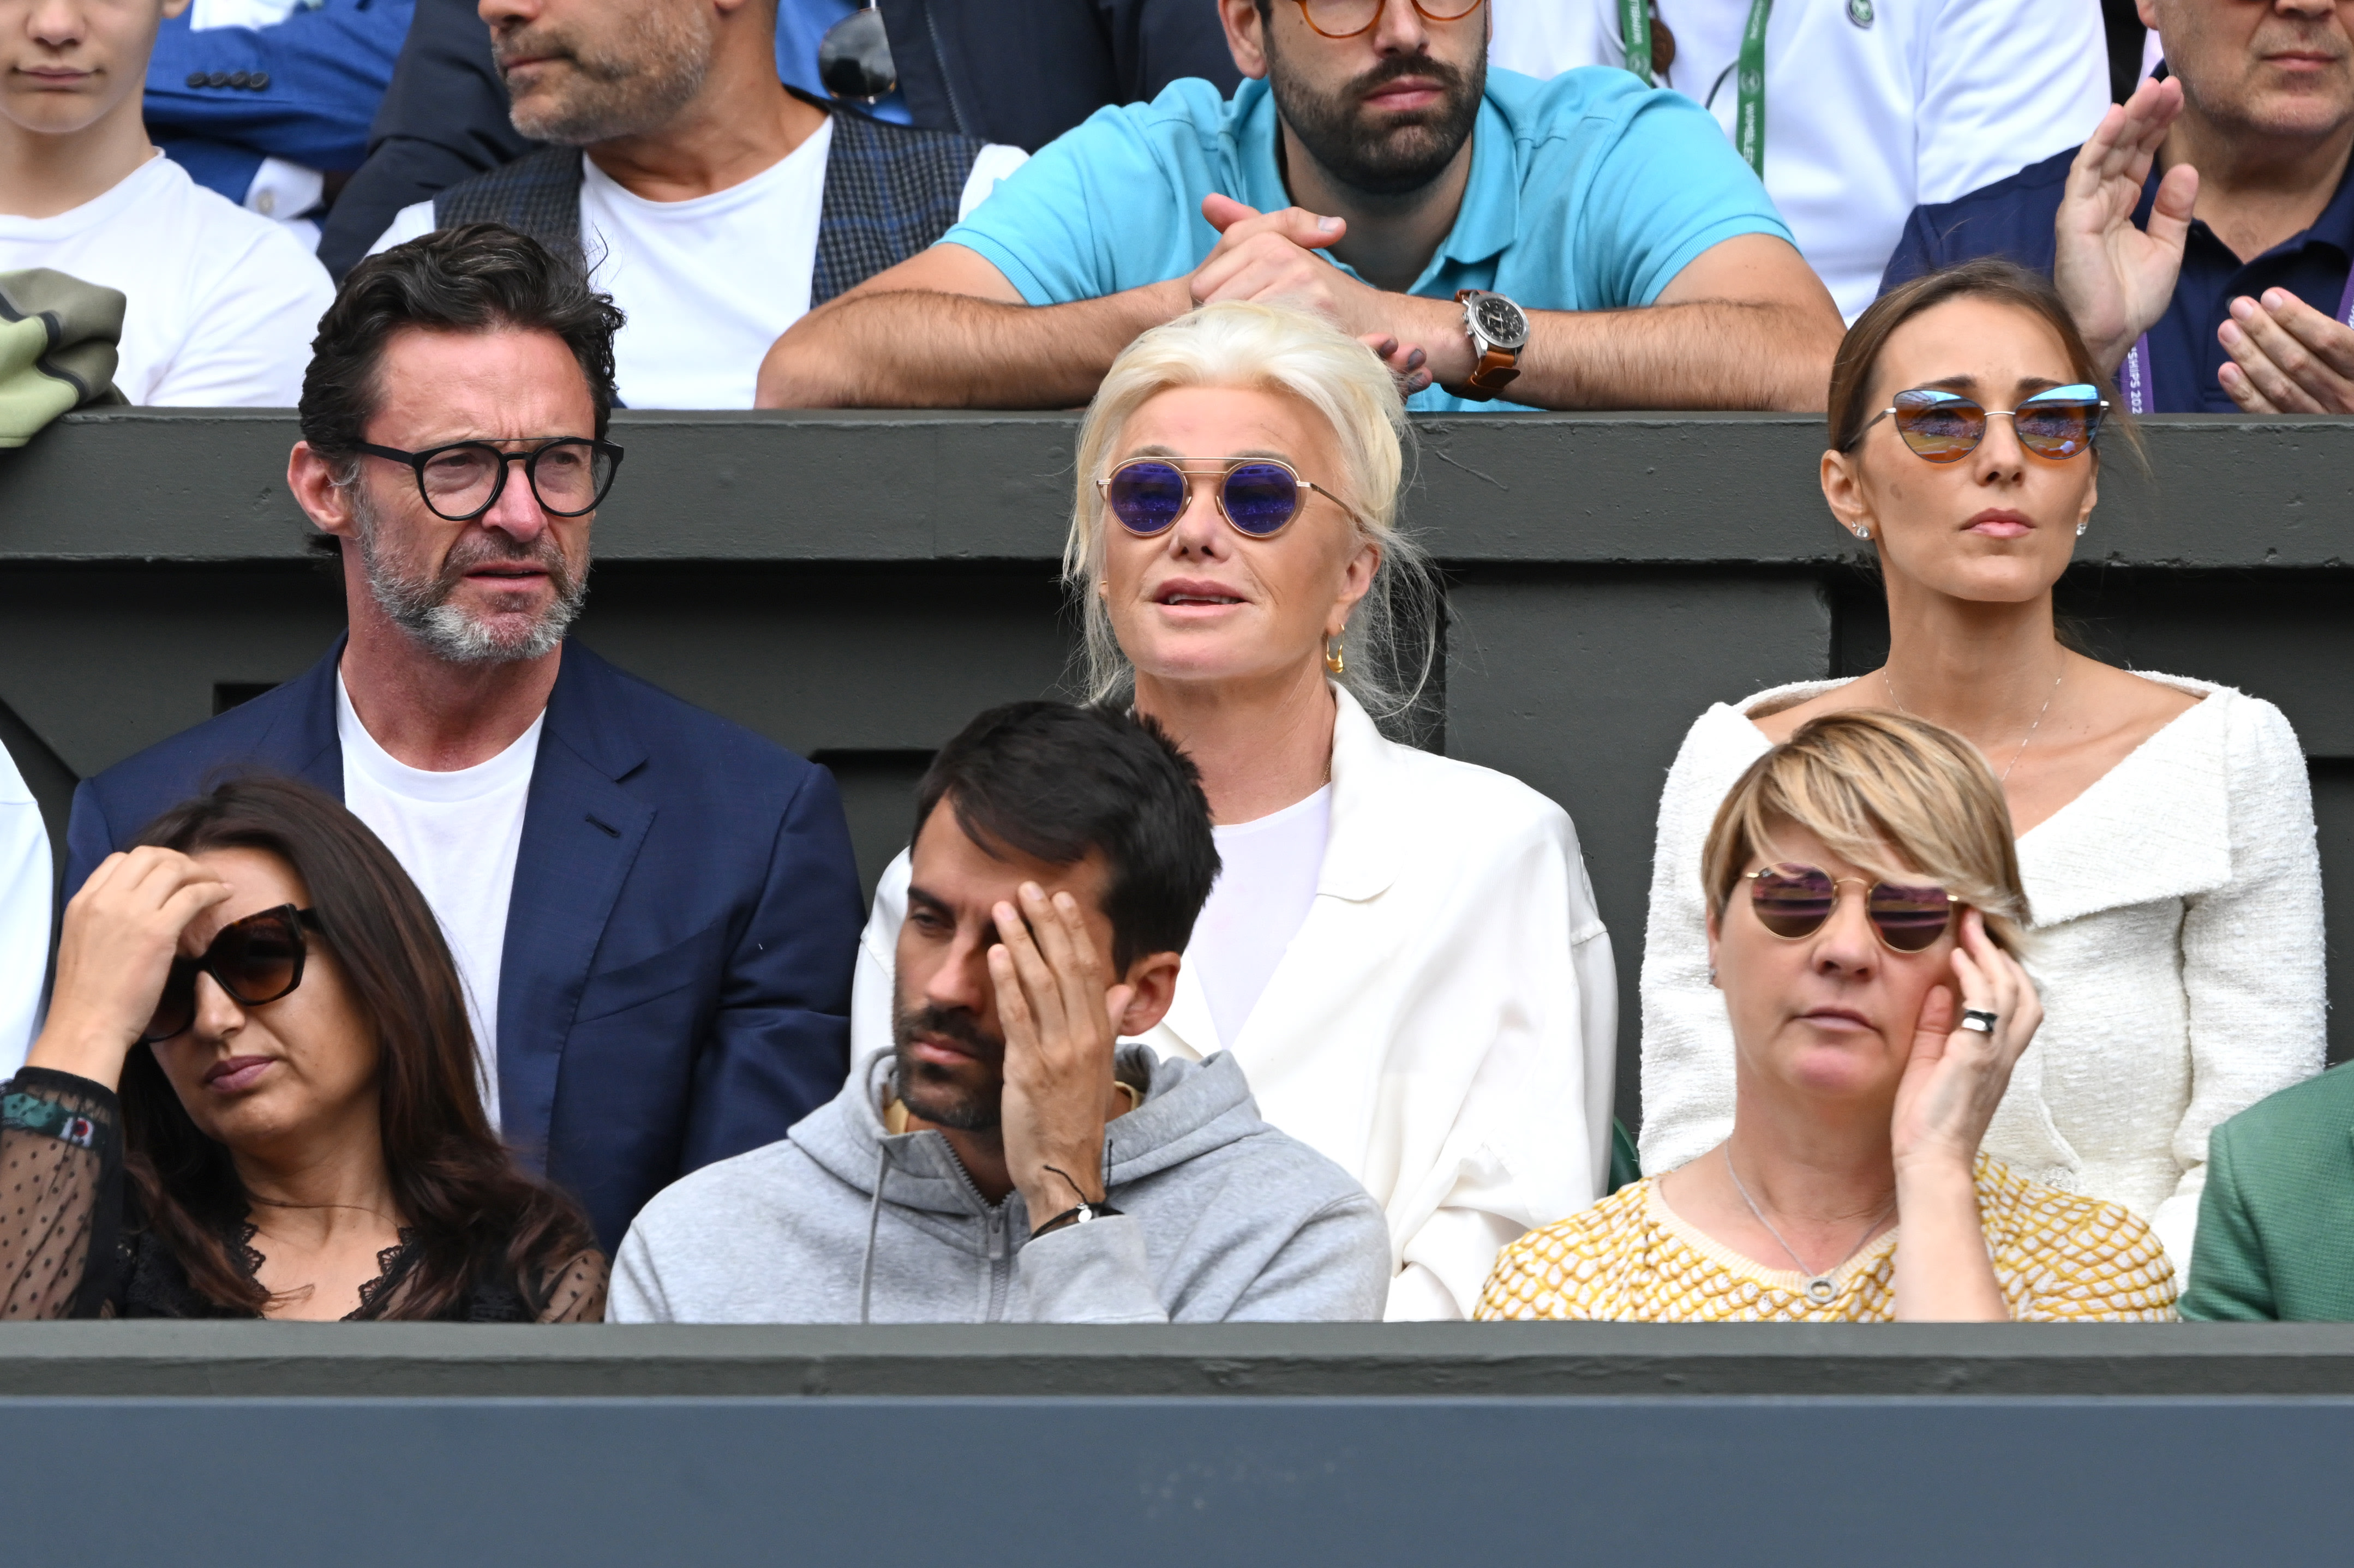 Ariana Grande, Hugh Jackman, Brad Pitt and Emma Watson among celebrities at the Wimbledon mens final